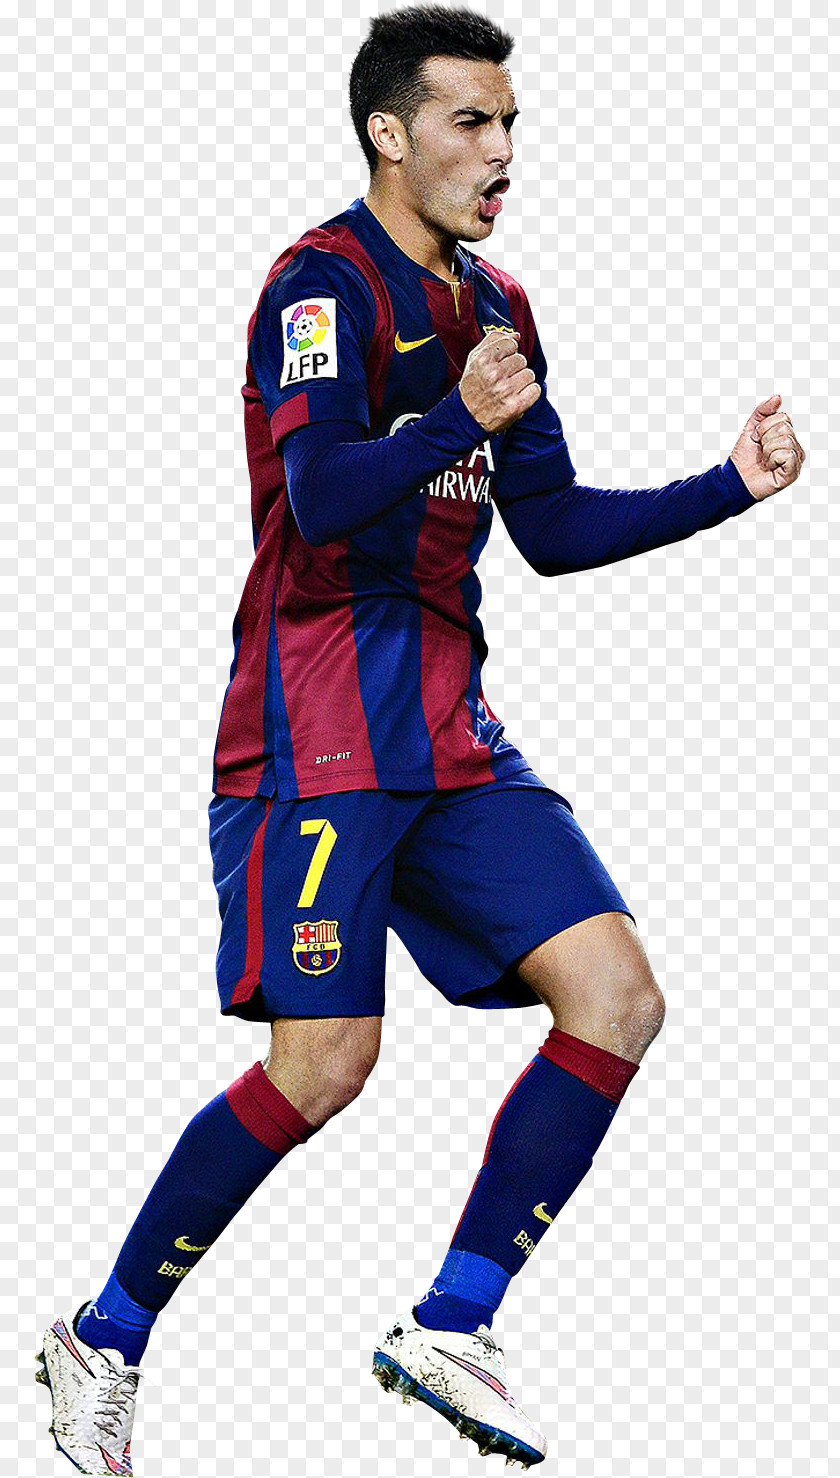 Neymar FC Barcelona Jersey Football Player PNG